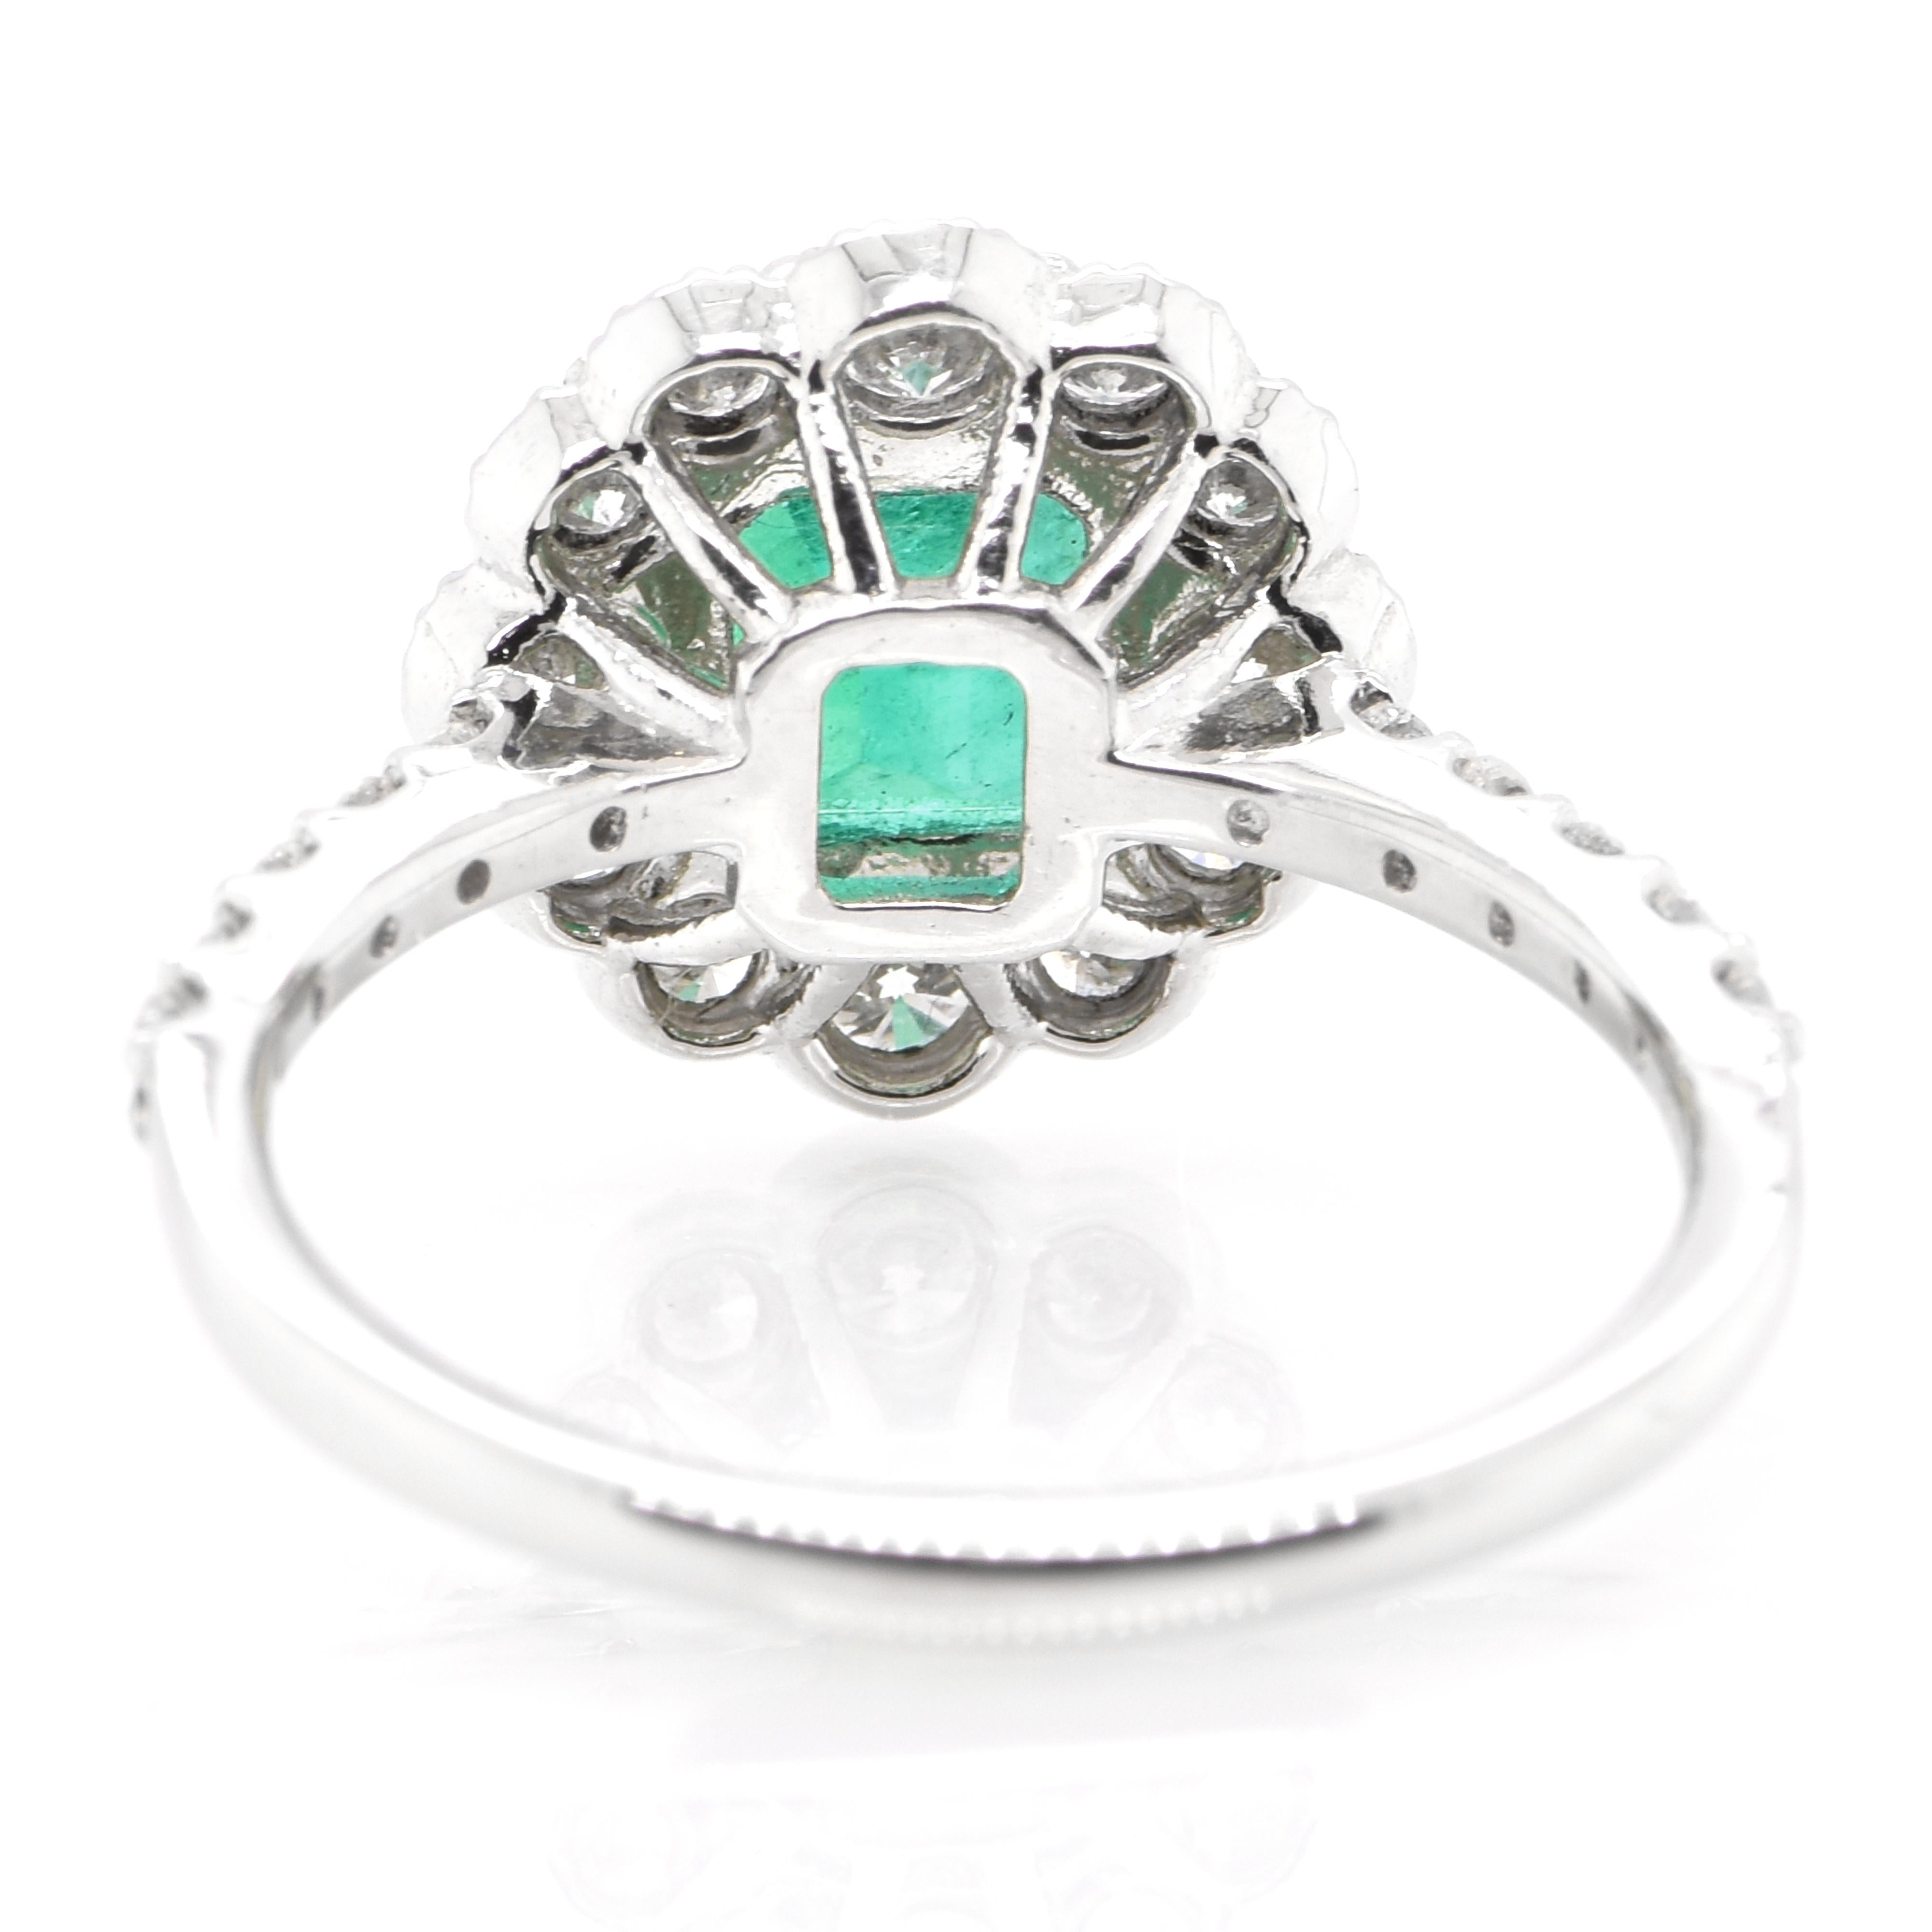 Women's 1.16 Carat Natural Emerald and Diamond Engagement Ring Set in Platinum